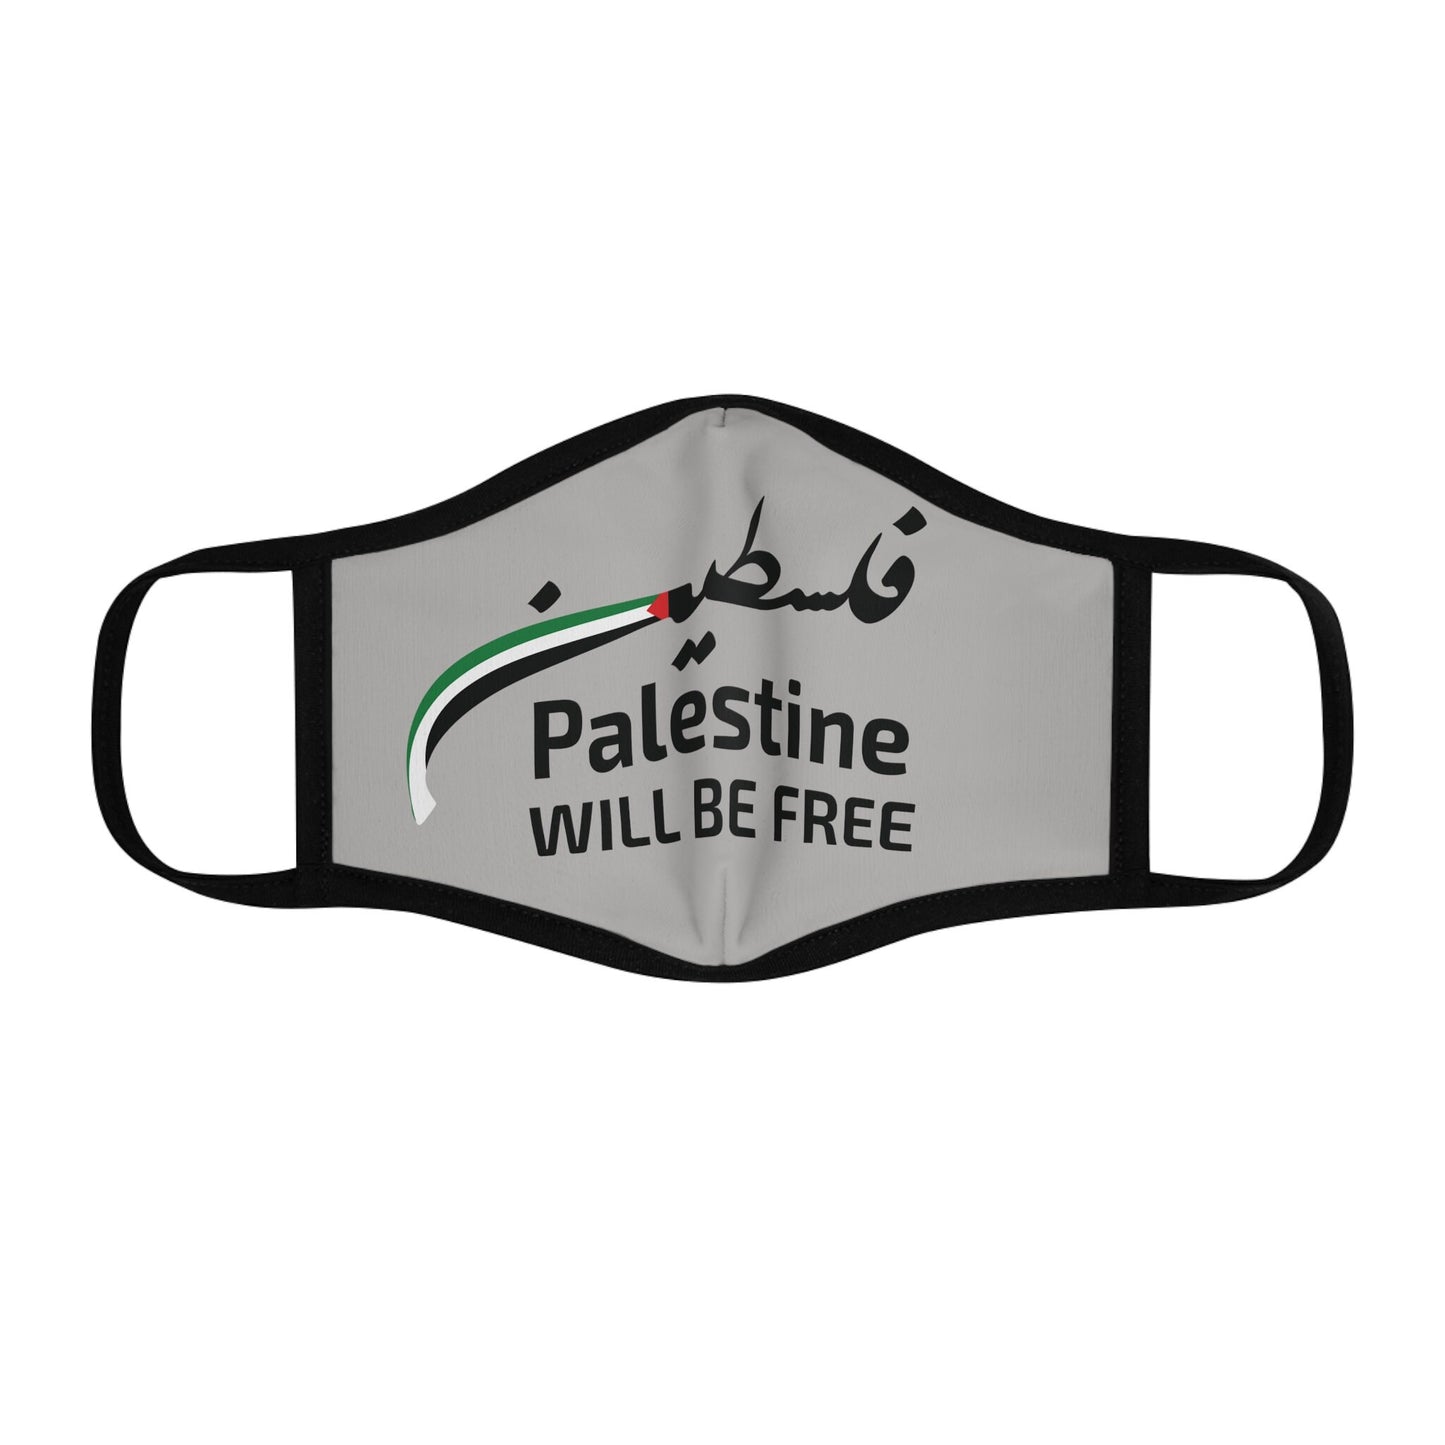 Palestine Face Mask, Free Palestine, Save Gaza Mask